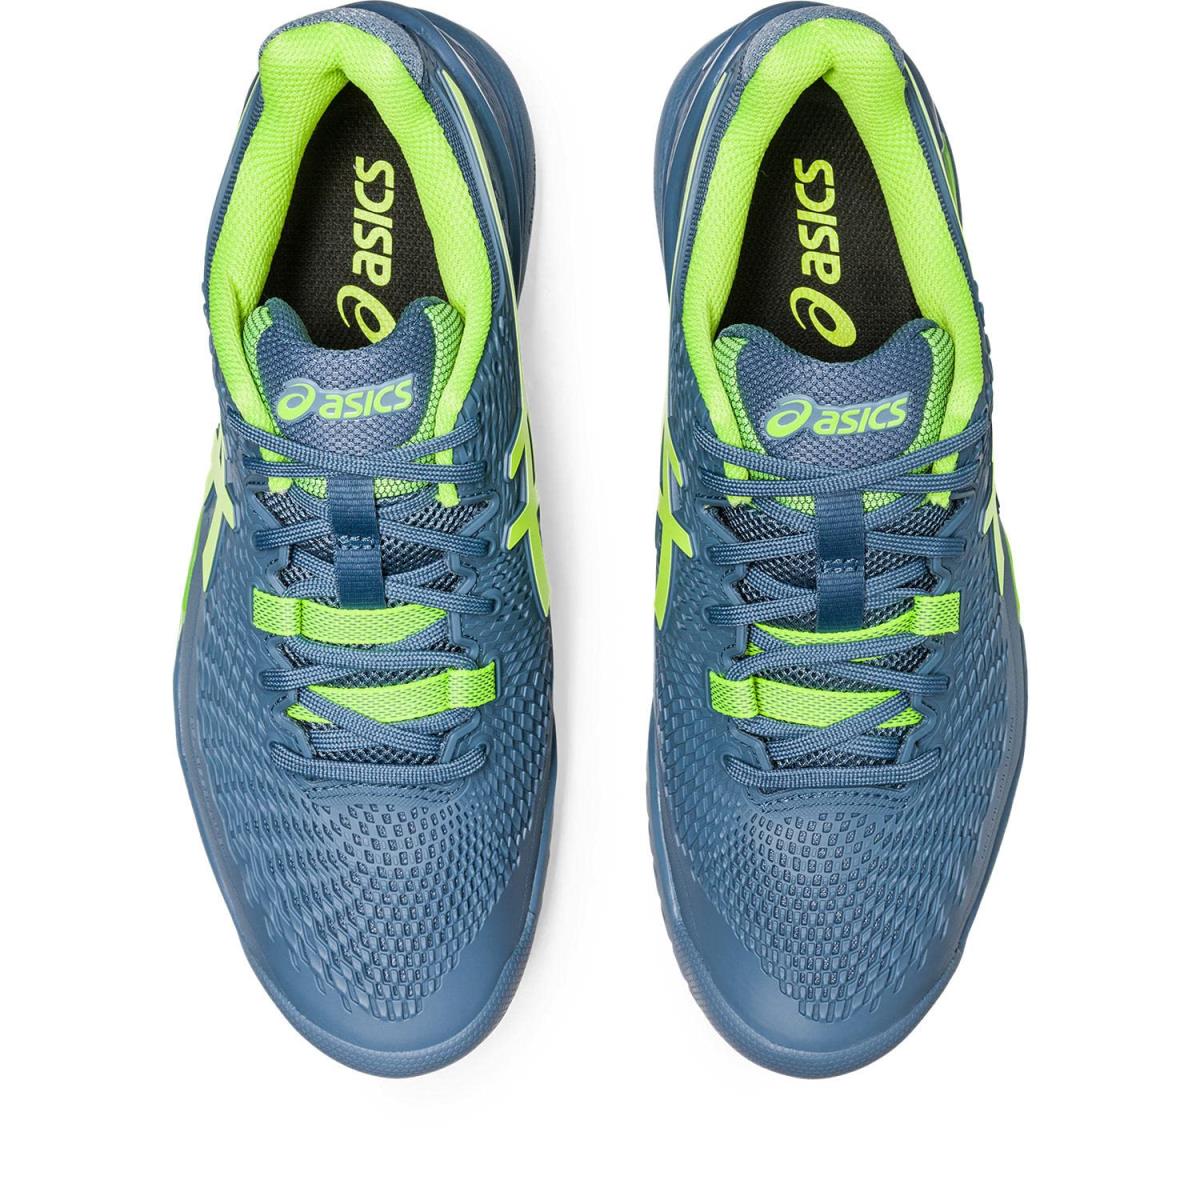 ASICS shoes  - Steel Blue/Hazard Green 0